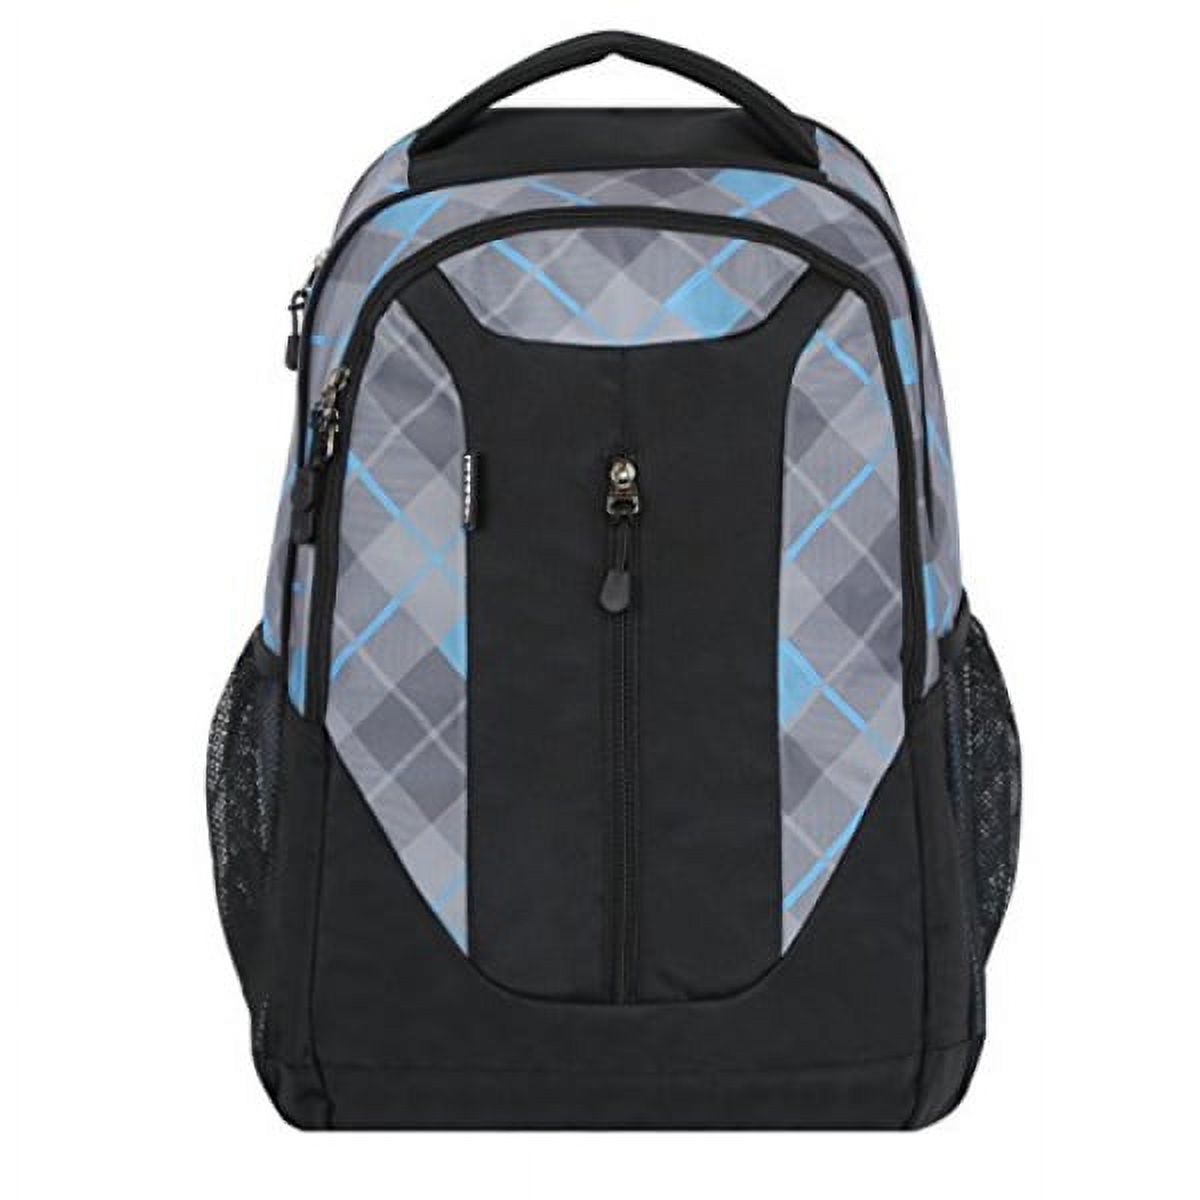 orben vertical zip laptop backpack (blue plaid) - image 1 of 1